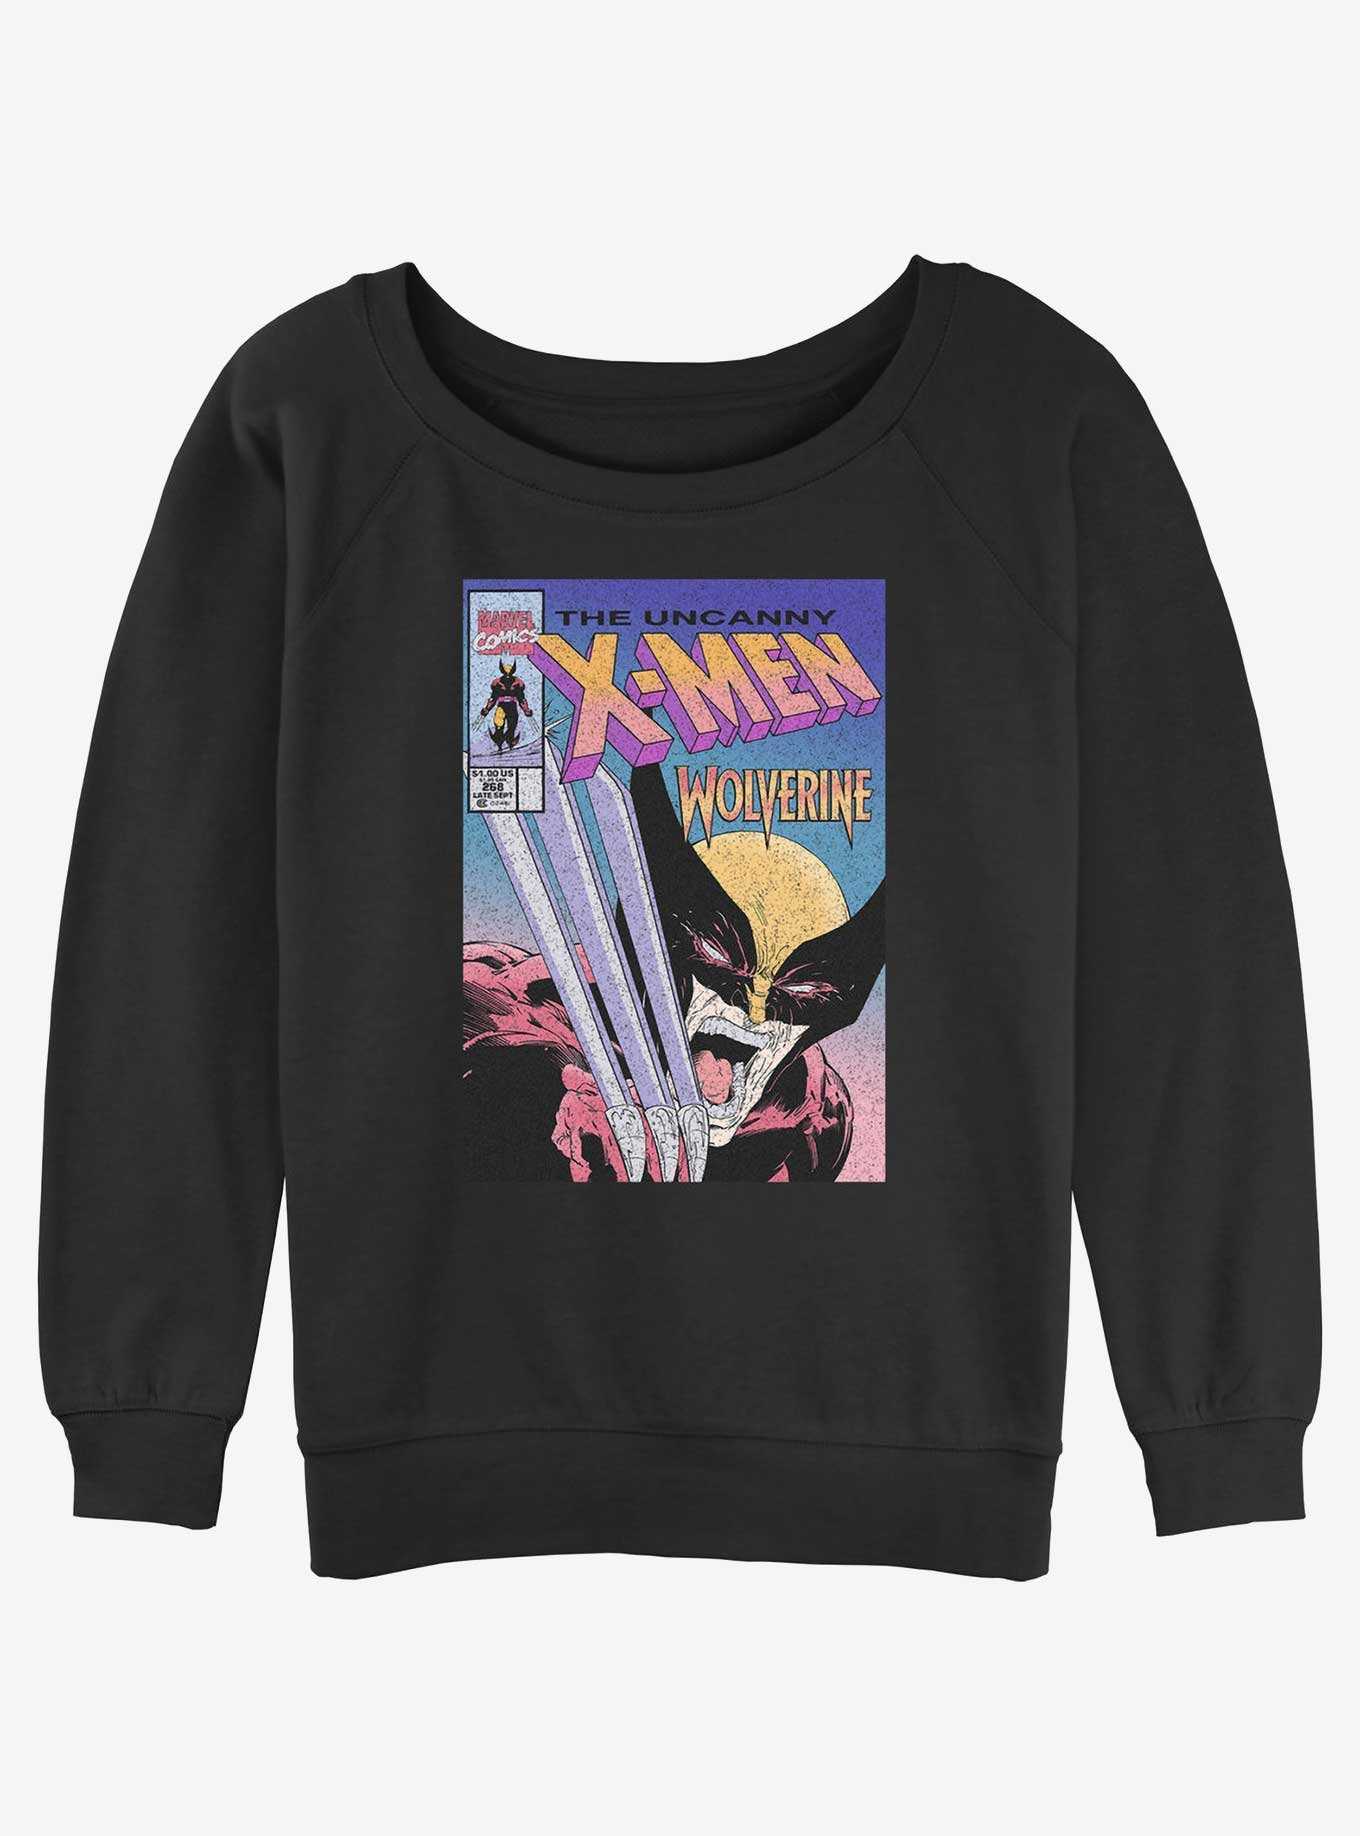 Wolverine The Uncanny X-Men Comic Cover Girls Slouchy Sweatshirt, , hi-res